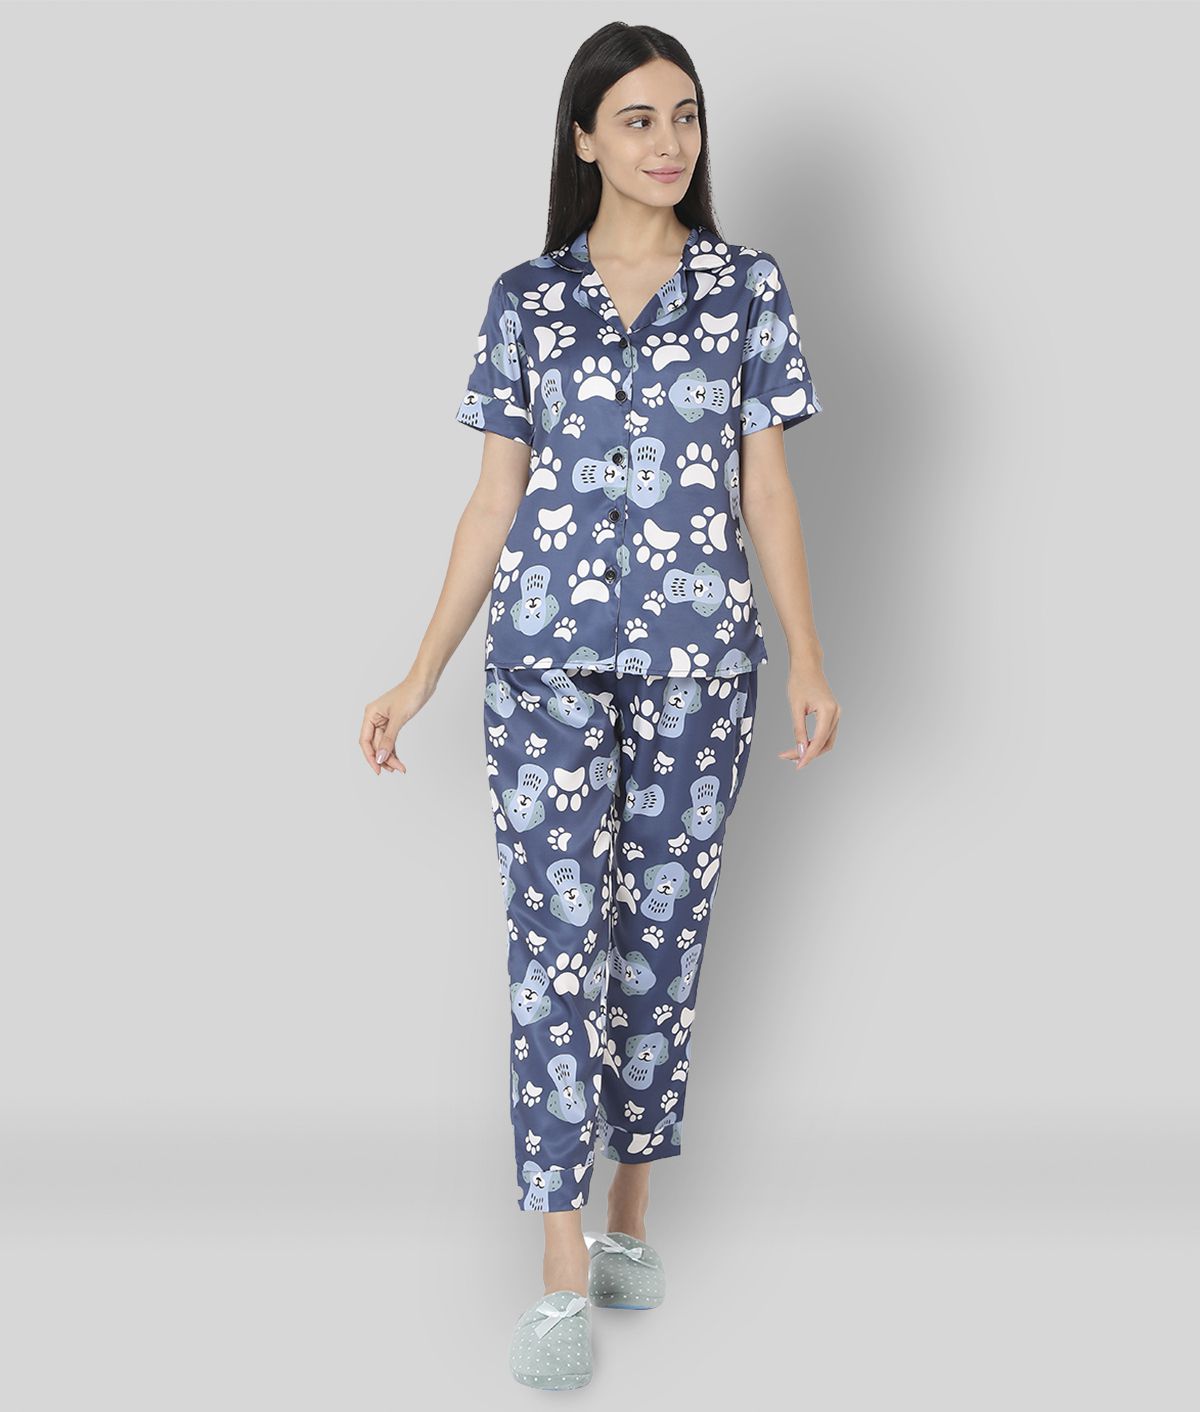     			Smarty Pants - Multicolor Satin Women's Nightwear Nightsuit Sets ( Pack of 1 )